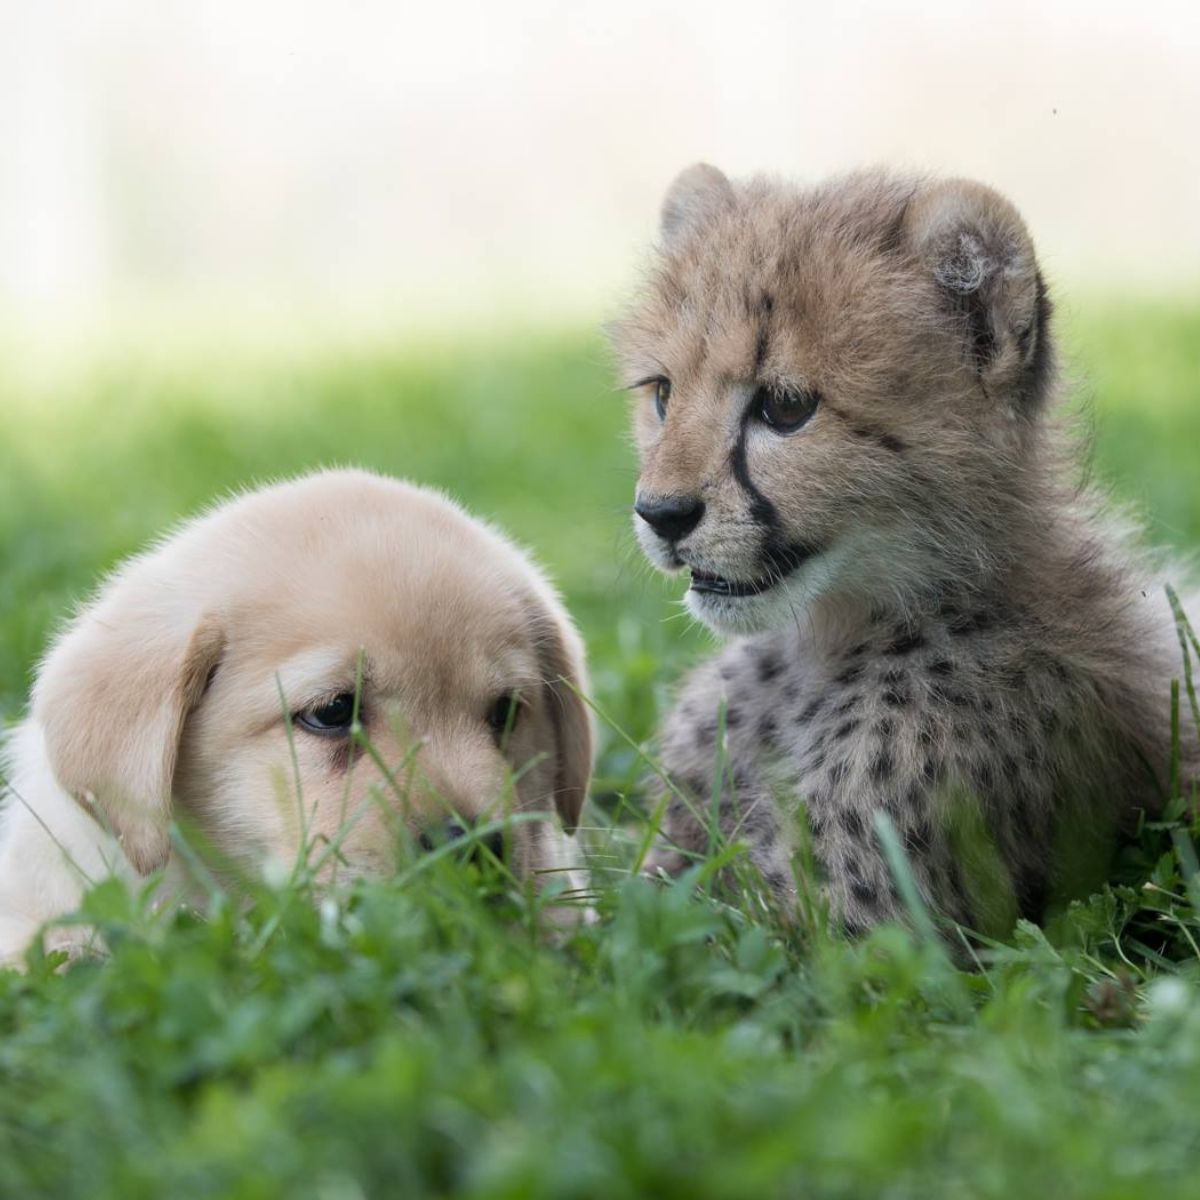 puppy and baby cheetah